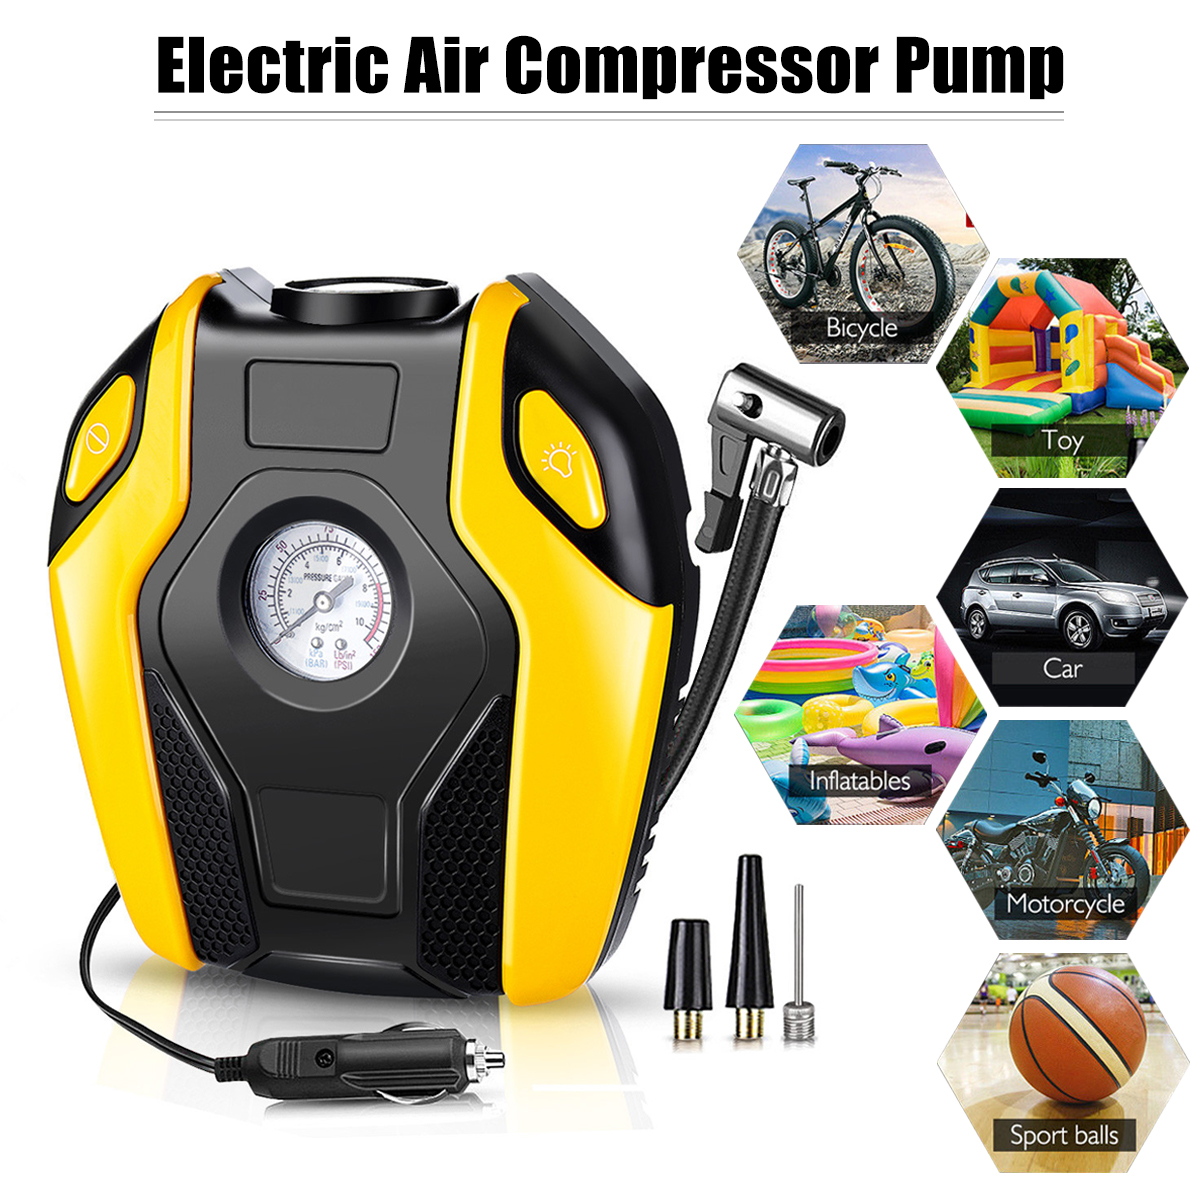 AUGIENB Portable Electric Air Compressor Pump